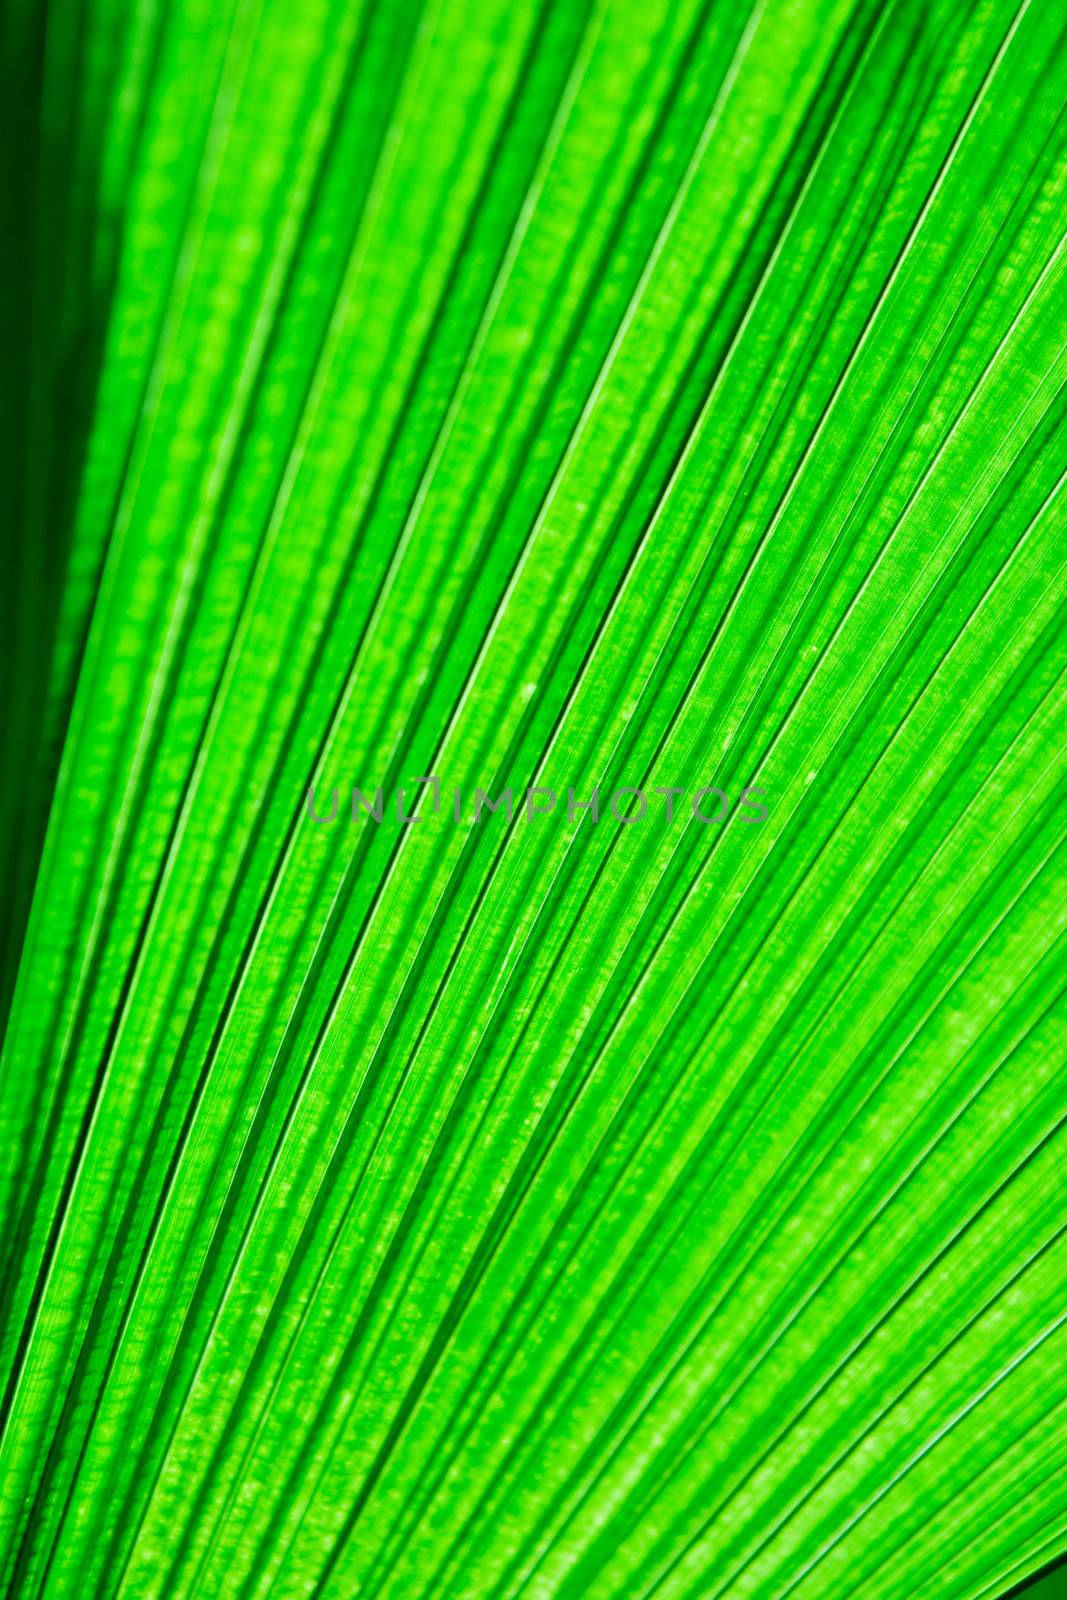 Leaf Texture by leaf